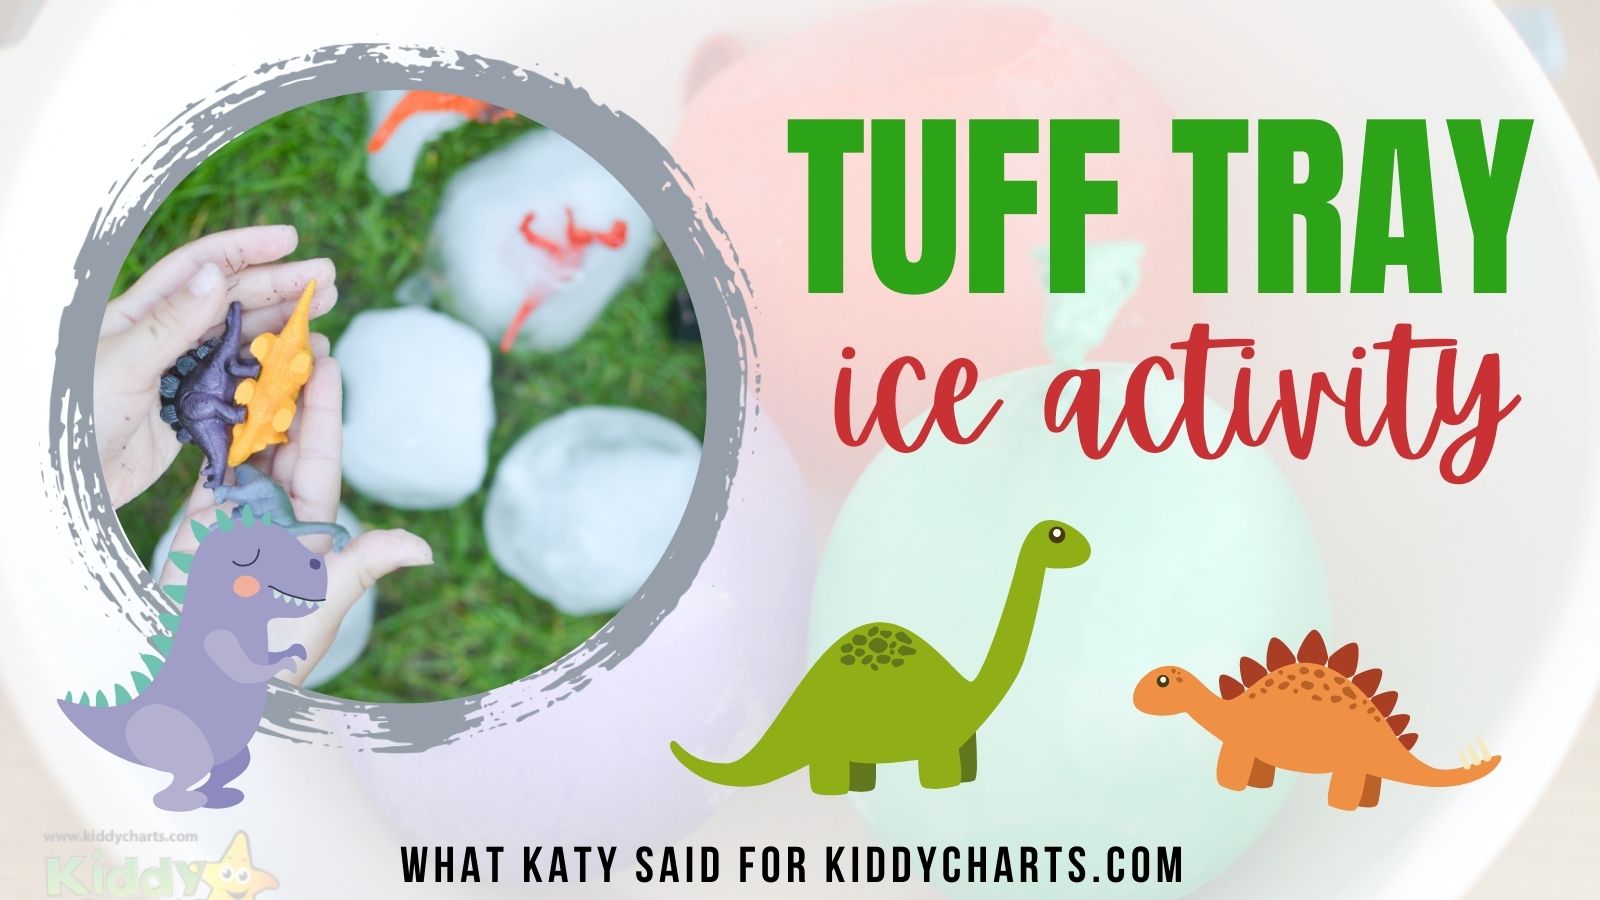 https://www.kiddycharts.com/assets/2022/05/tuff-tray-ice-activity.jpg